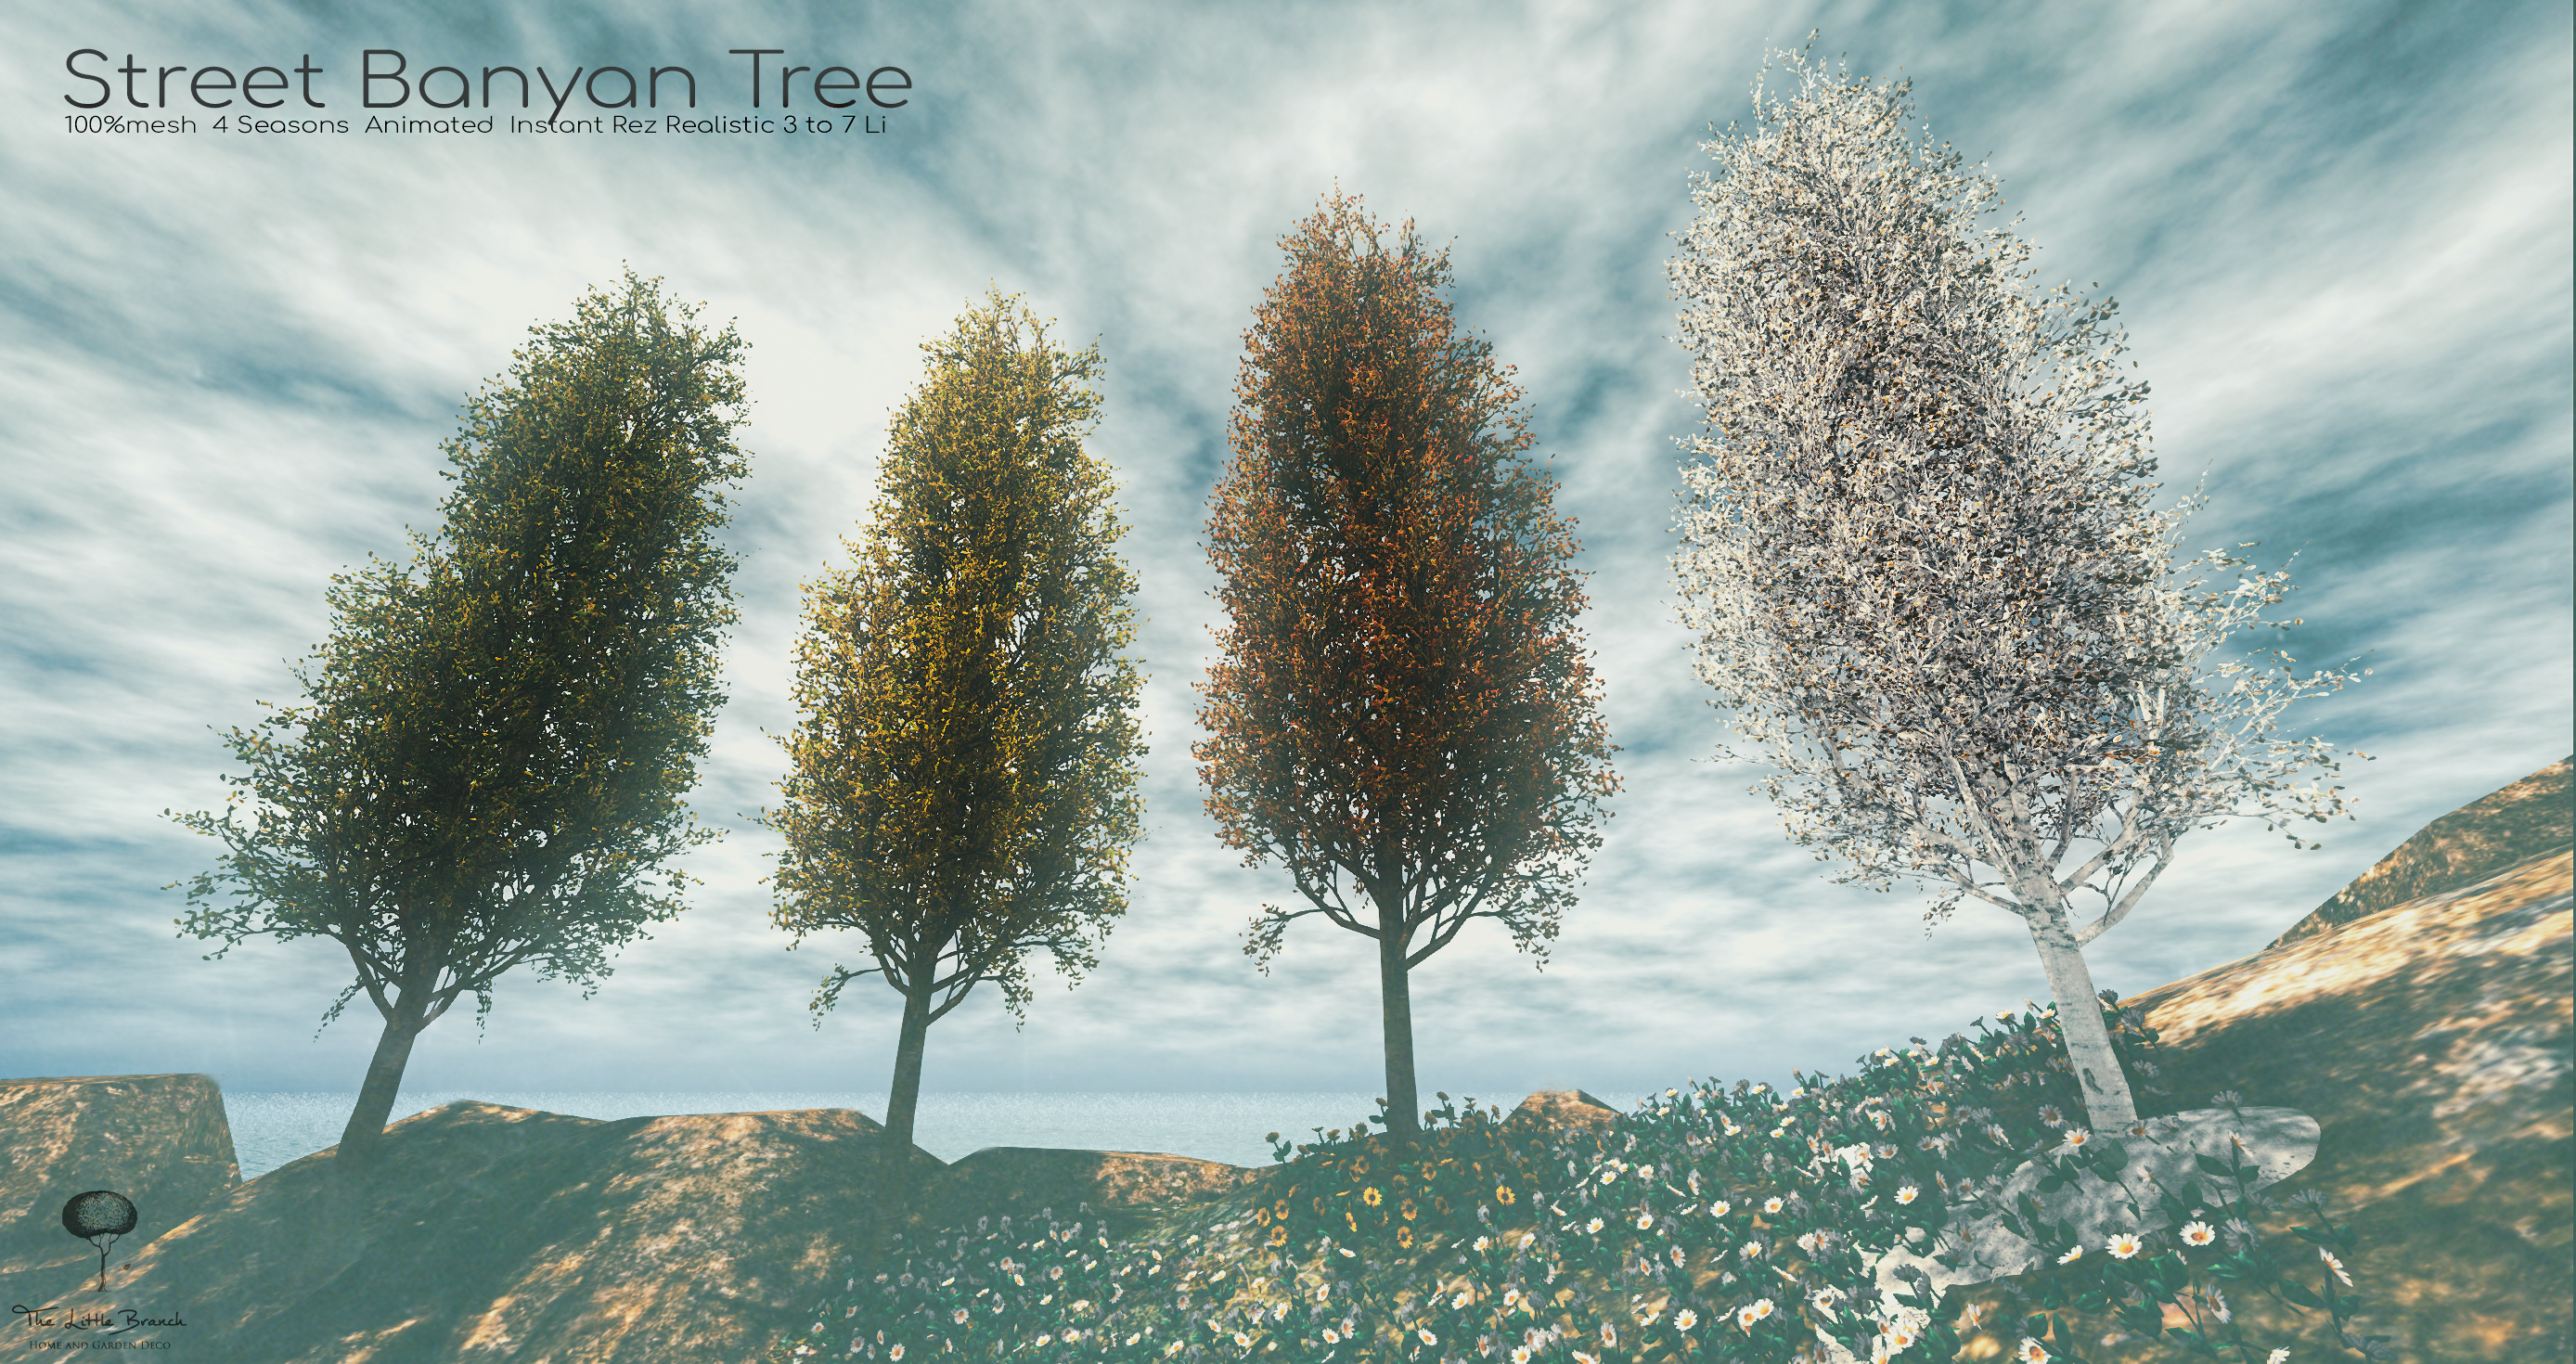 The Little Branch – The Street Banyan Tree